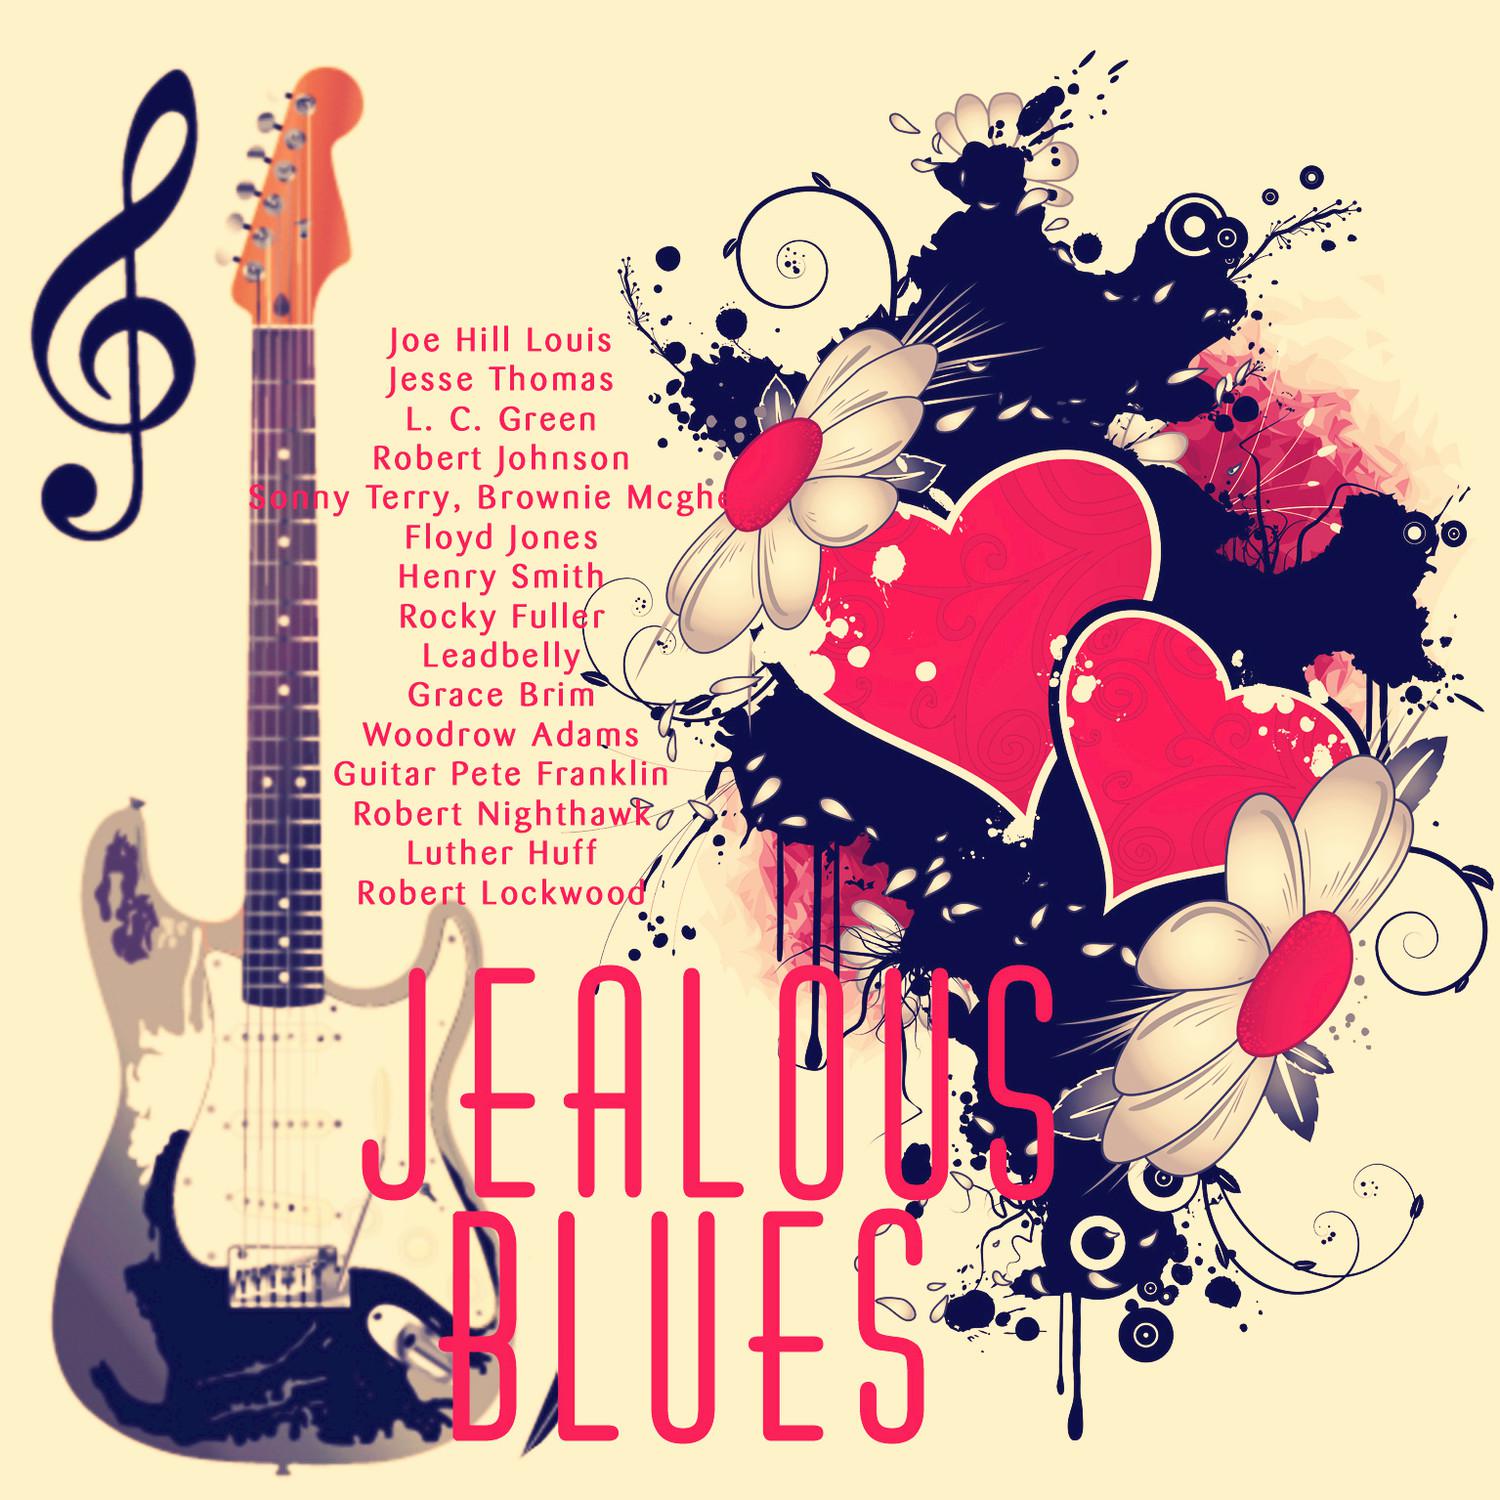 Jealous Blues